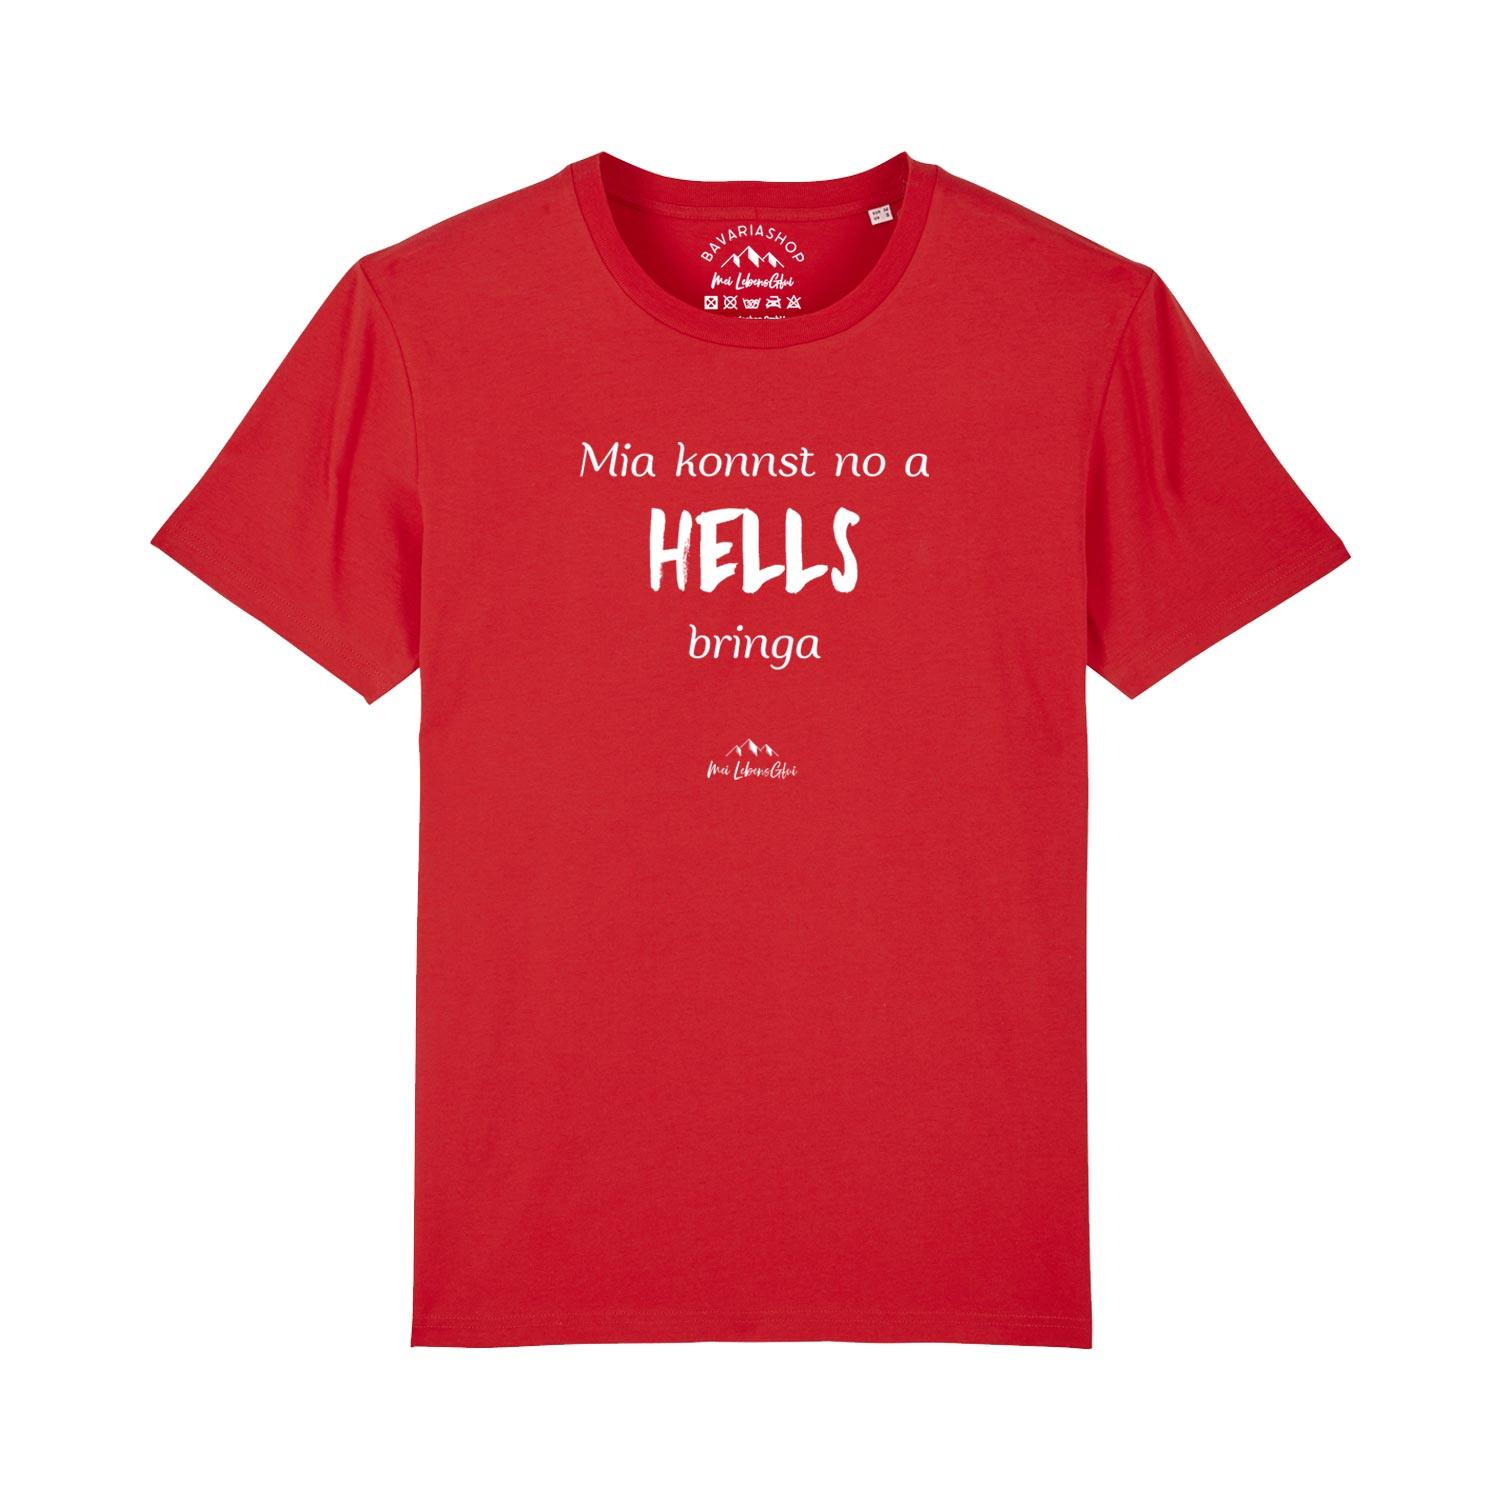 Herren T-Shirt "Mia konnst no a Hells bringa" - bavariashop - mei LebensGfui